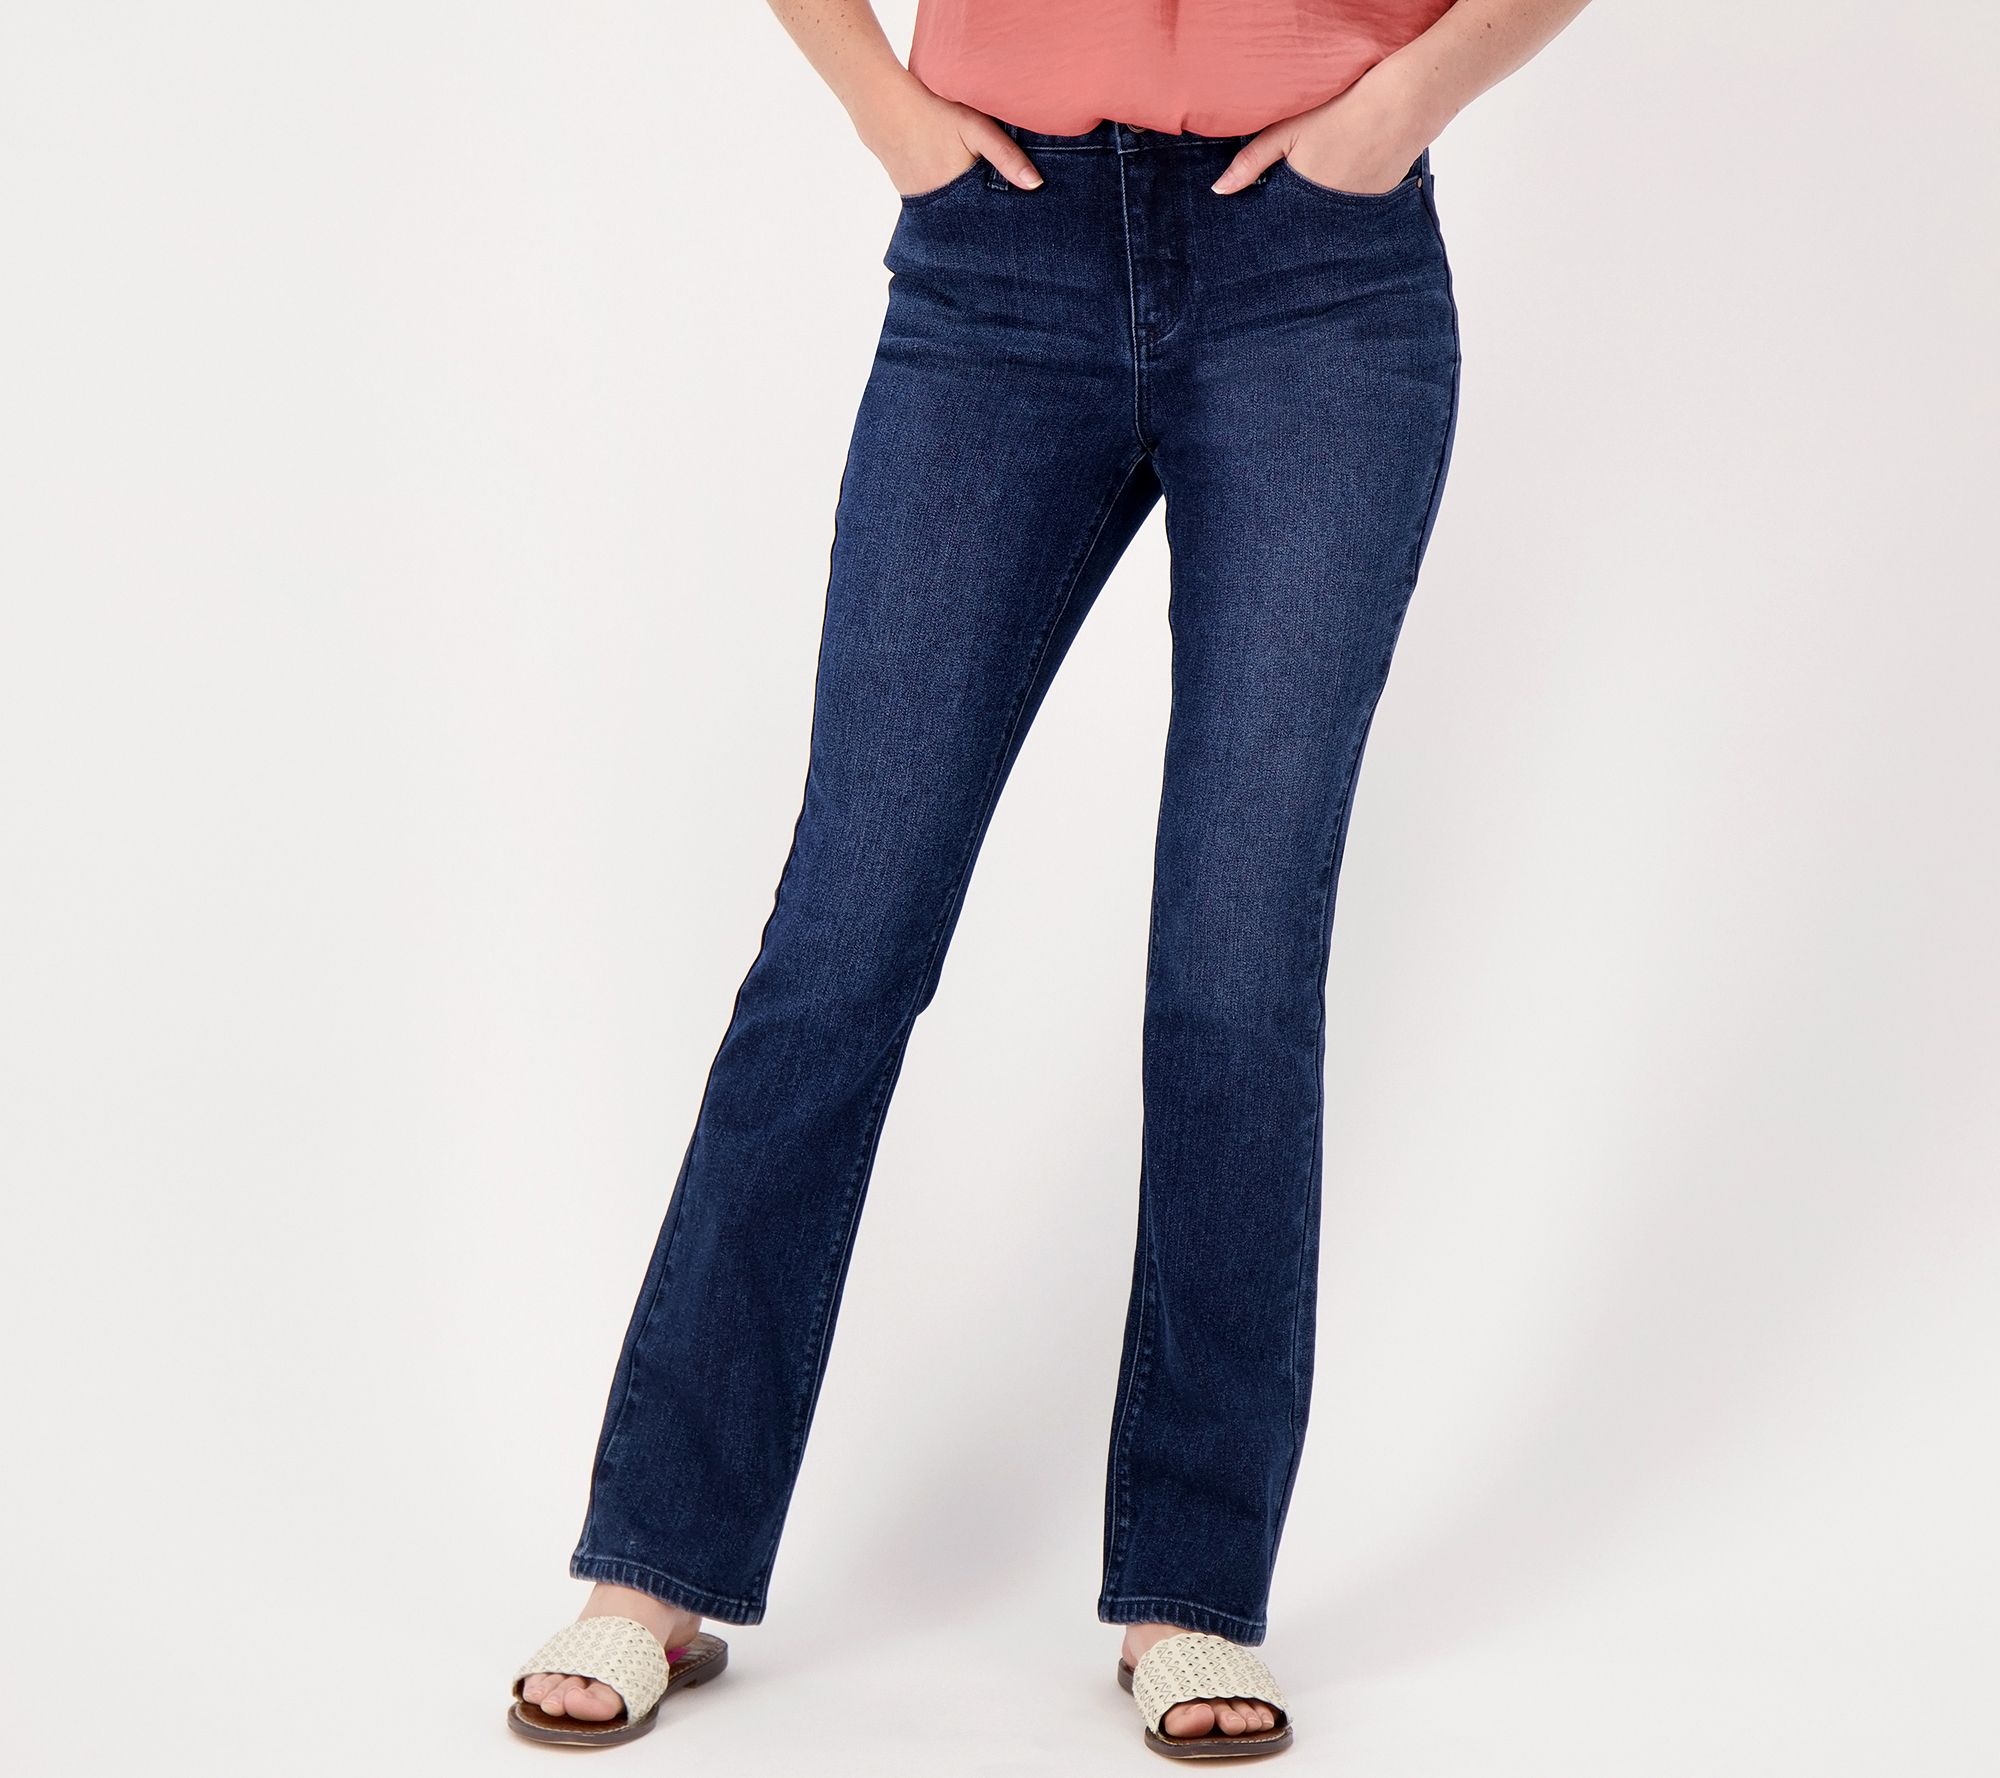 Levi's Women's 725 Heritage High Rise Bootcut Jeans - Medium Indigo